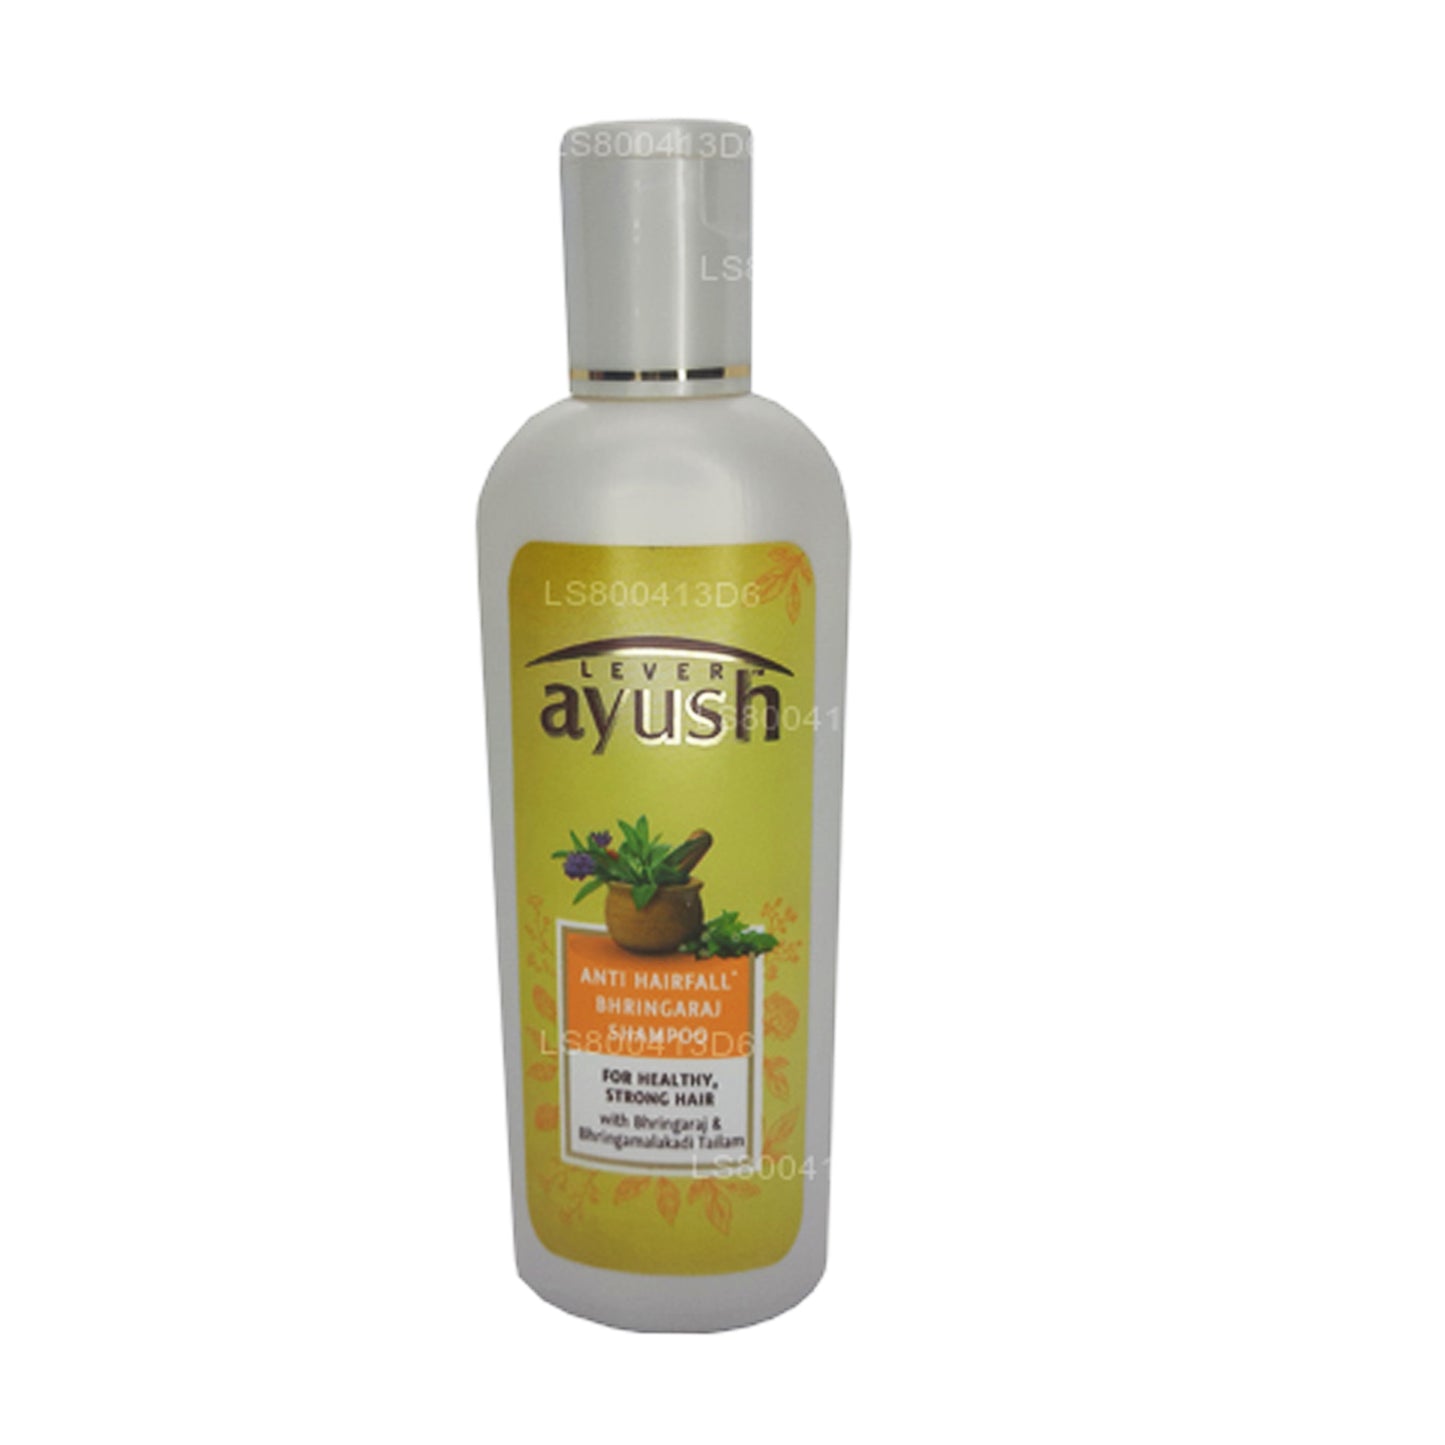 Lever Ayush Anti Hairfall Bhringaraj Shampoo (175ml)